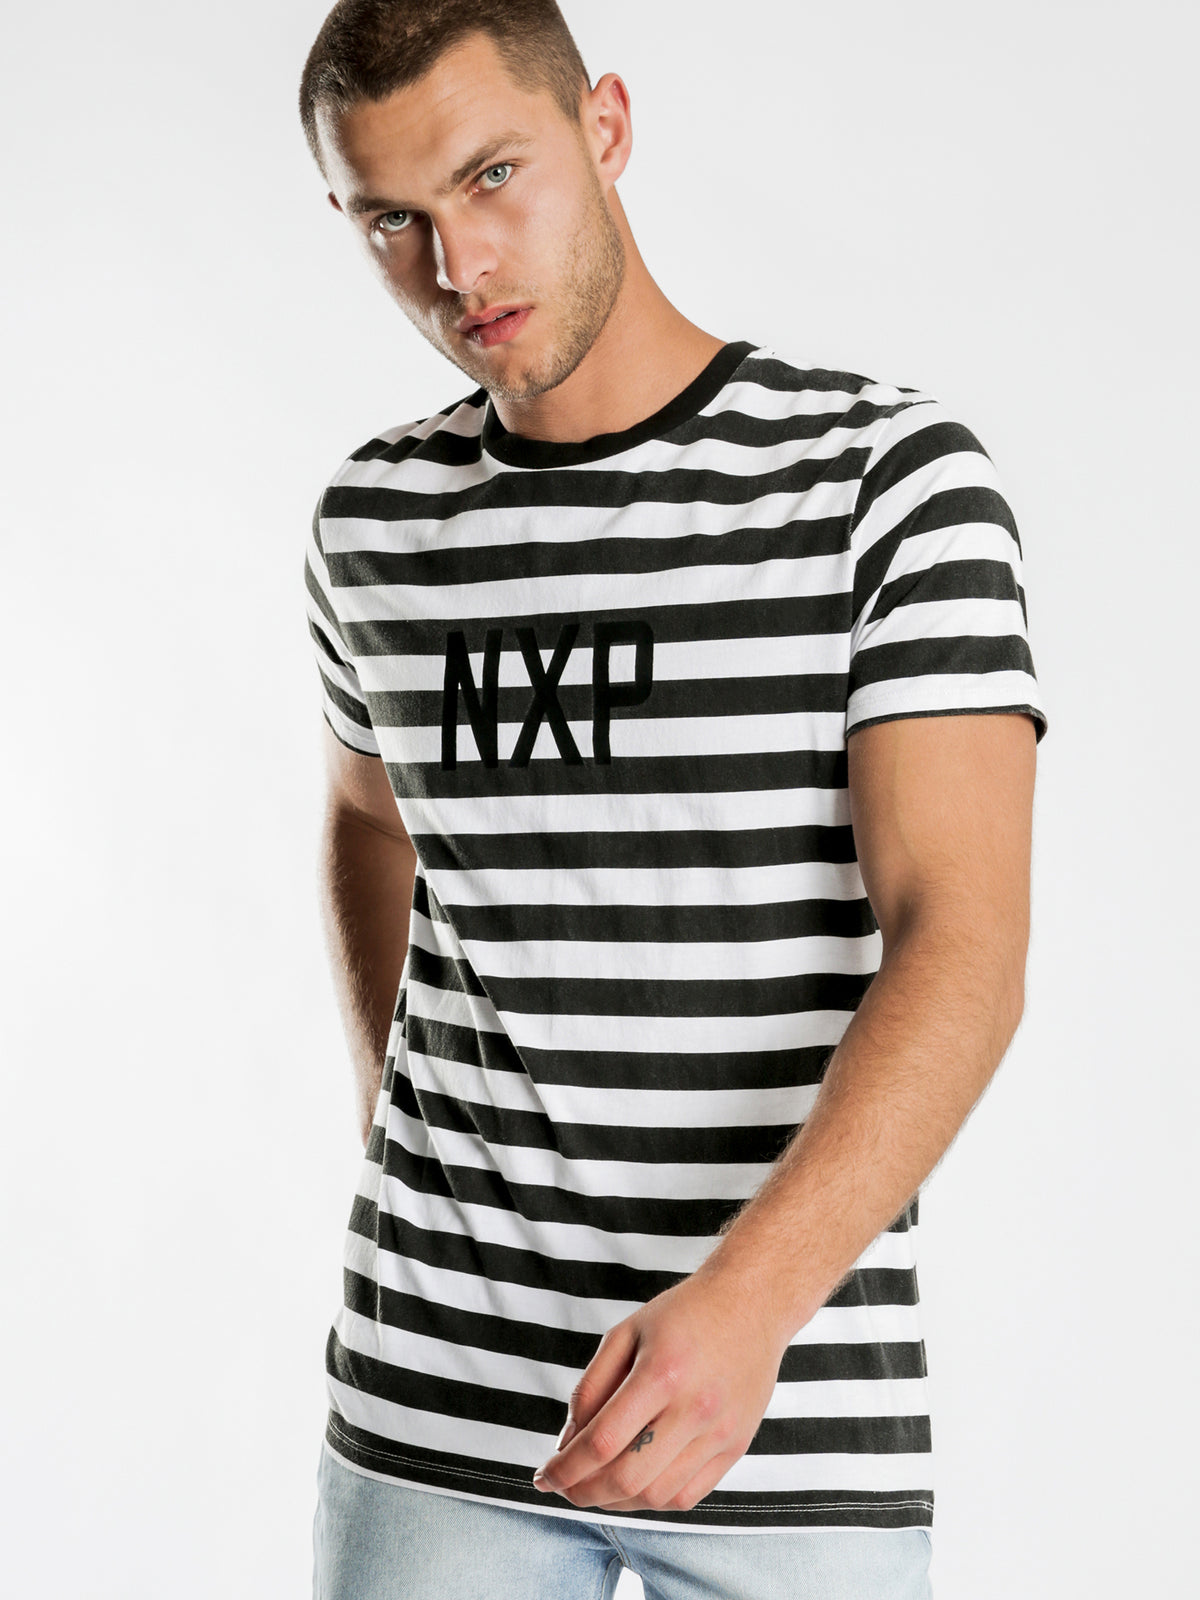 Break Cape Back T-Shirt in  Black &amp; White Stripe